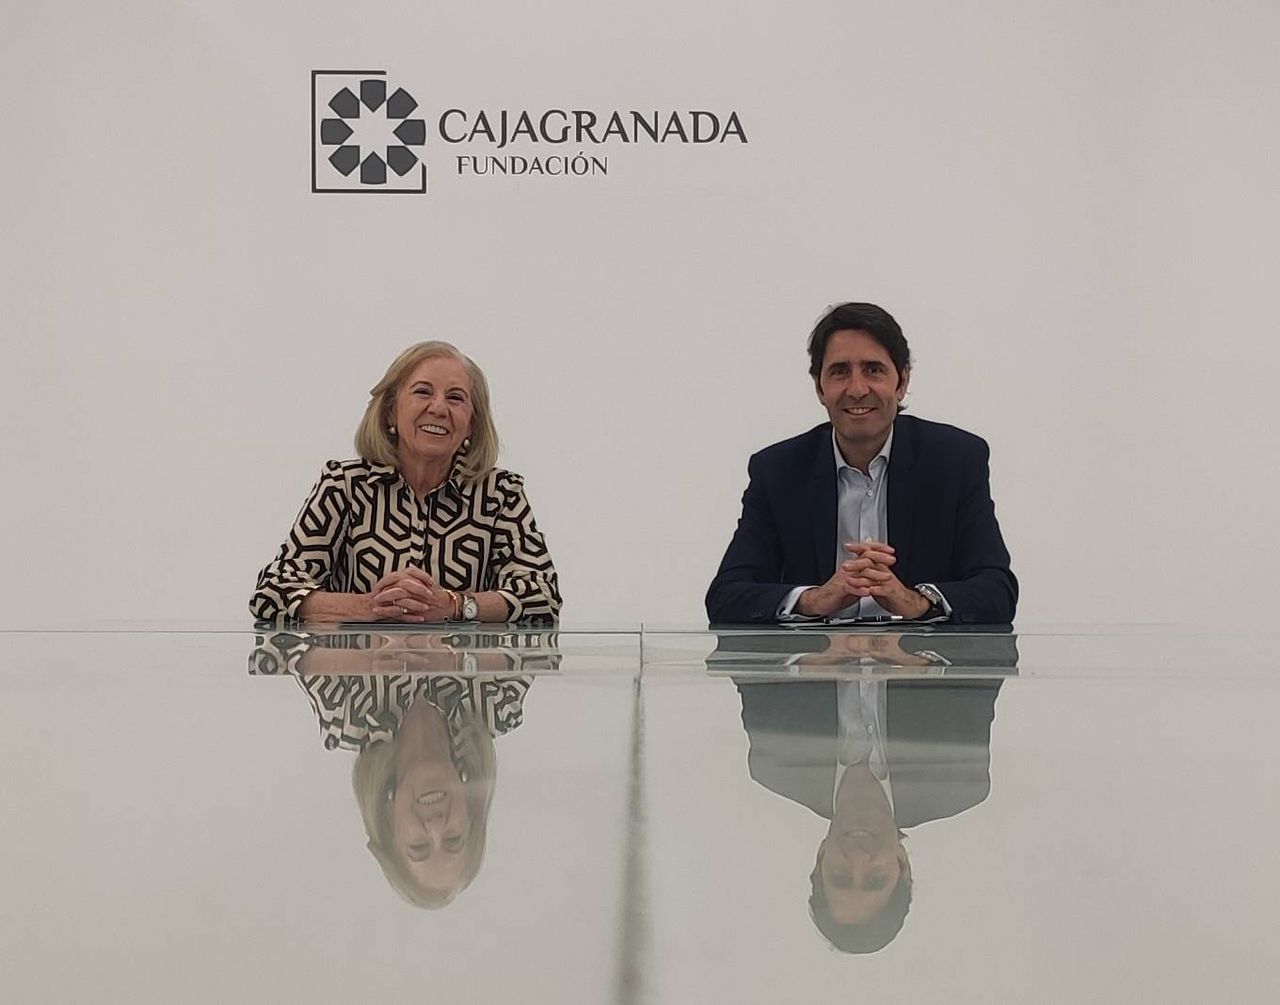 Maria Helena Martin Vivaldi and Ignacio Cuerva at the signing of the sponsorship agreement.